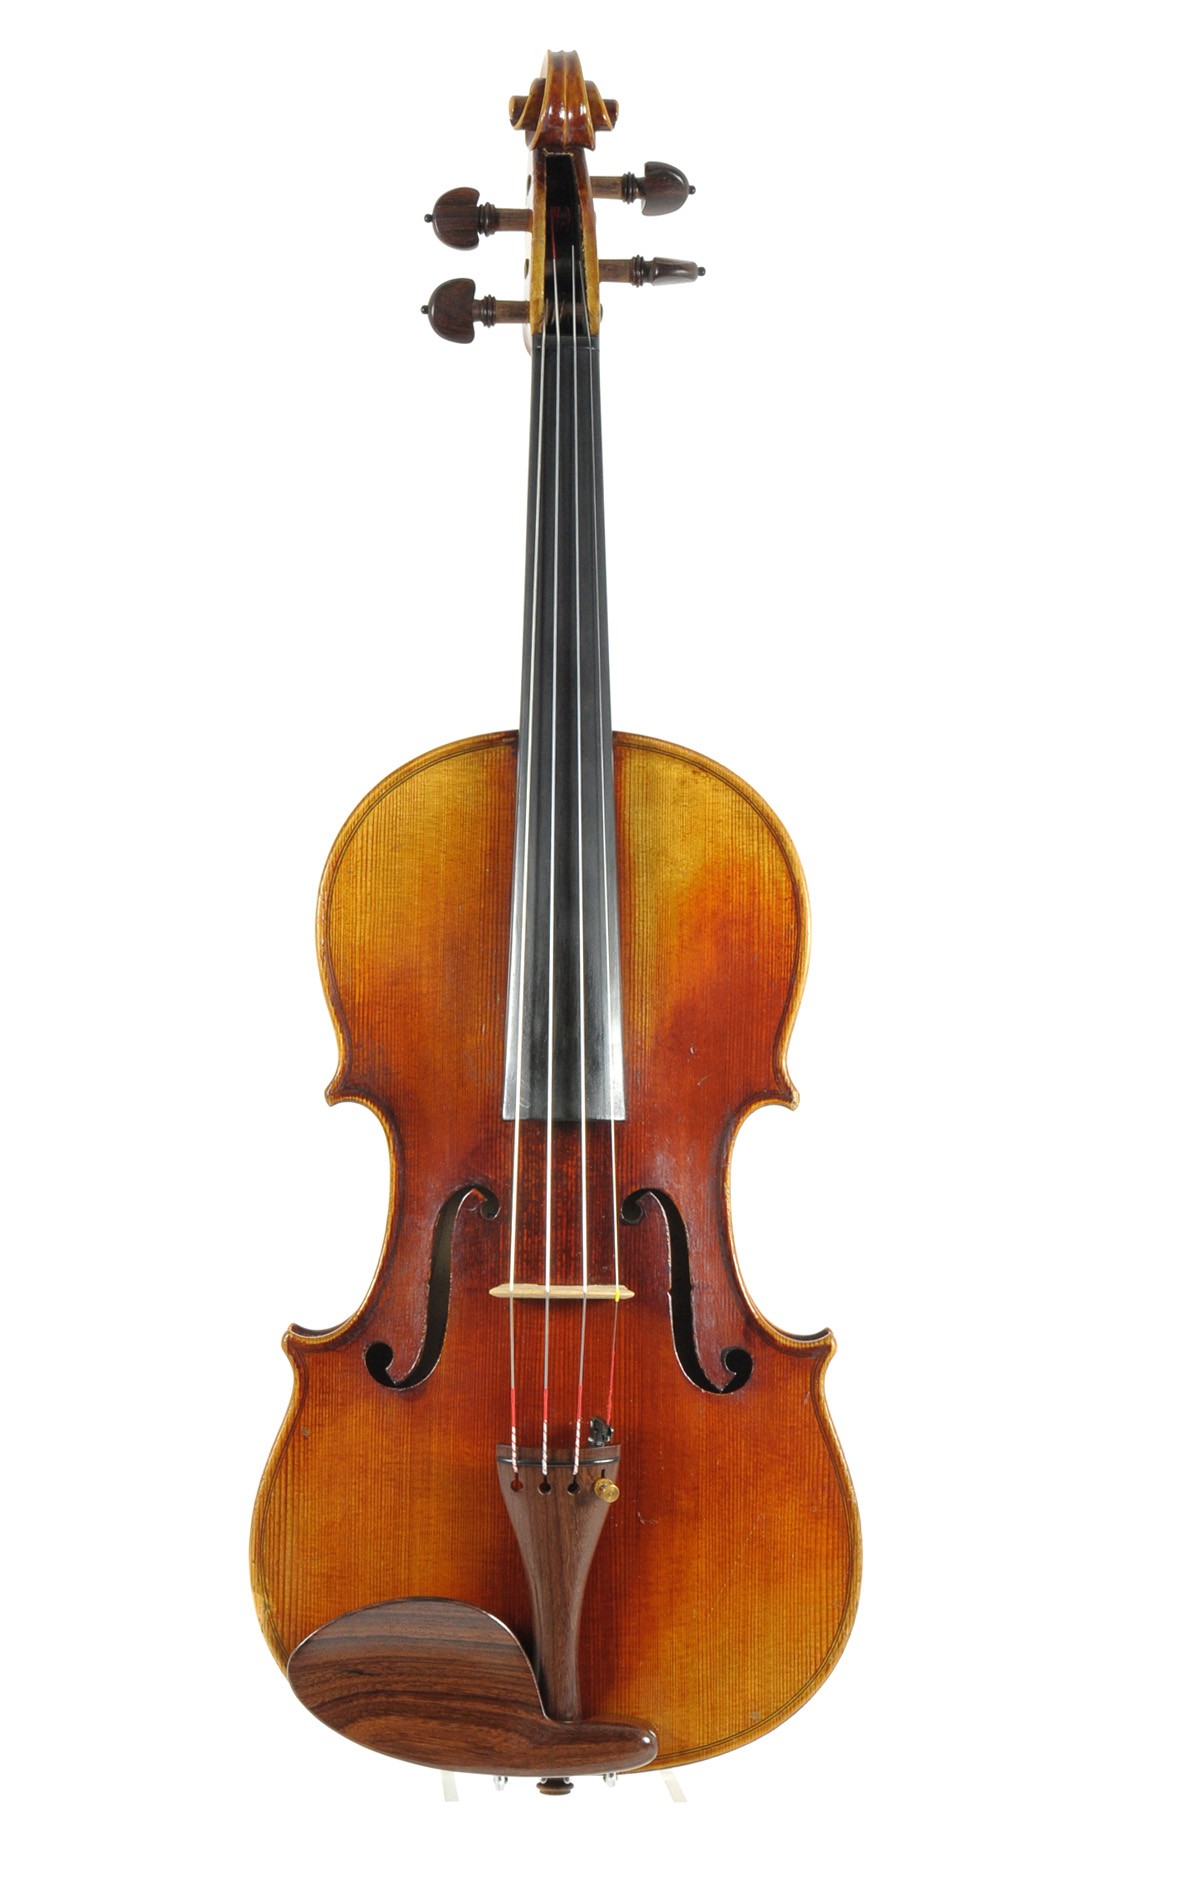 Violin by Georg Louis Doelling (jr.), Markneukirchen 1897 - top